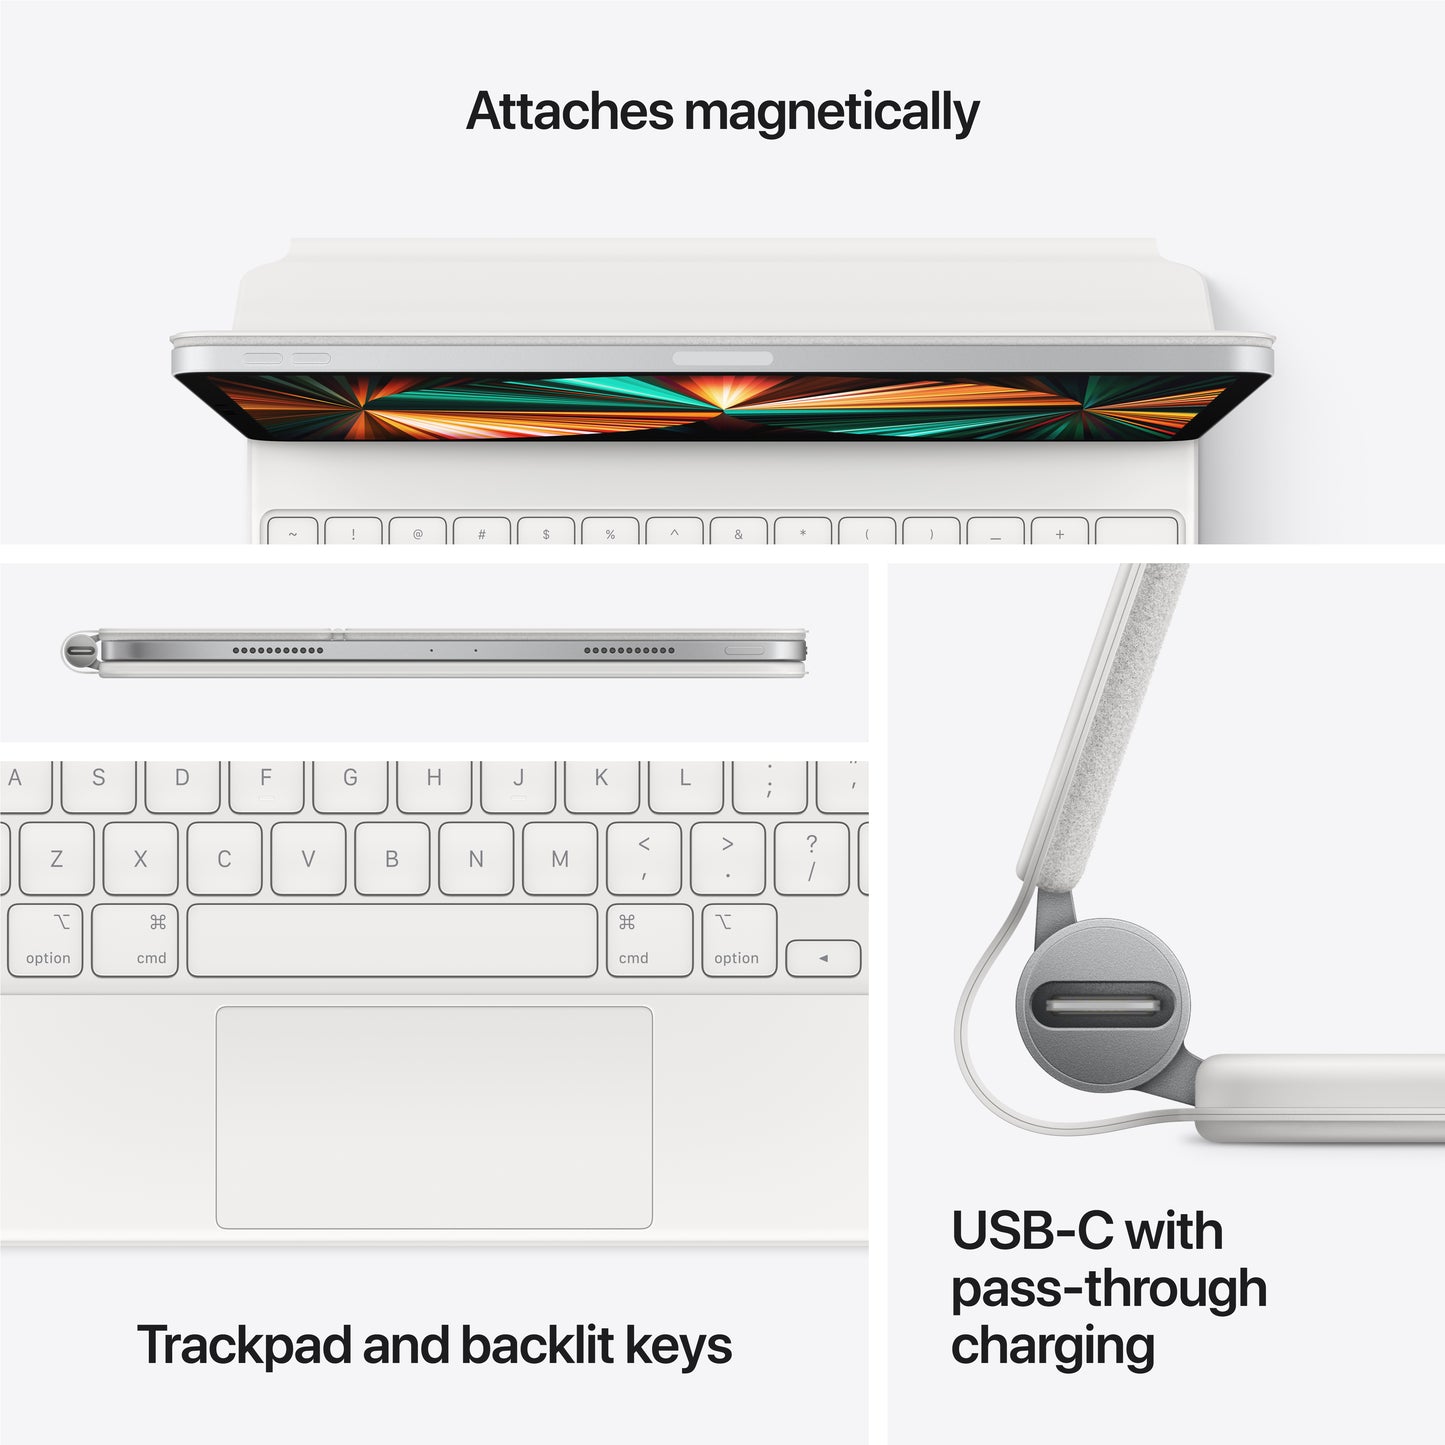 Apple Magic Keyboard for 12.9-inch iPad Pro (5th Generation) - White